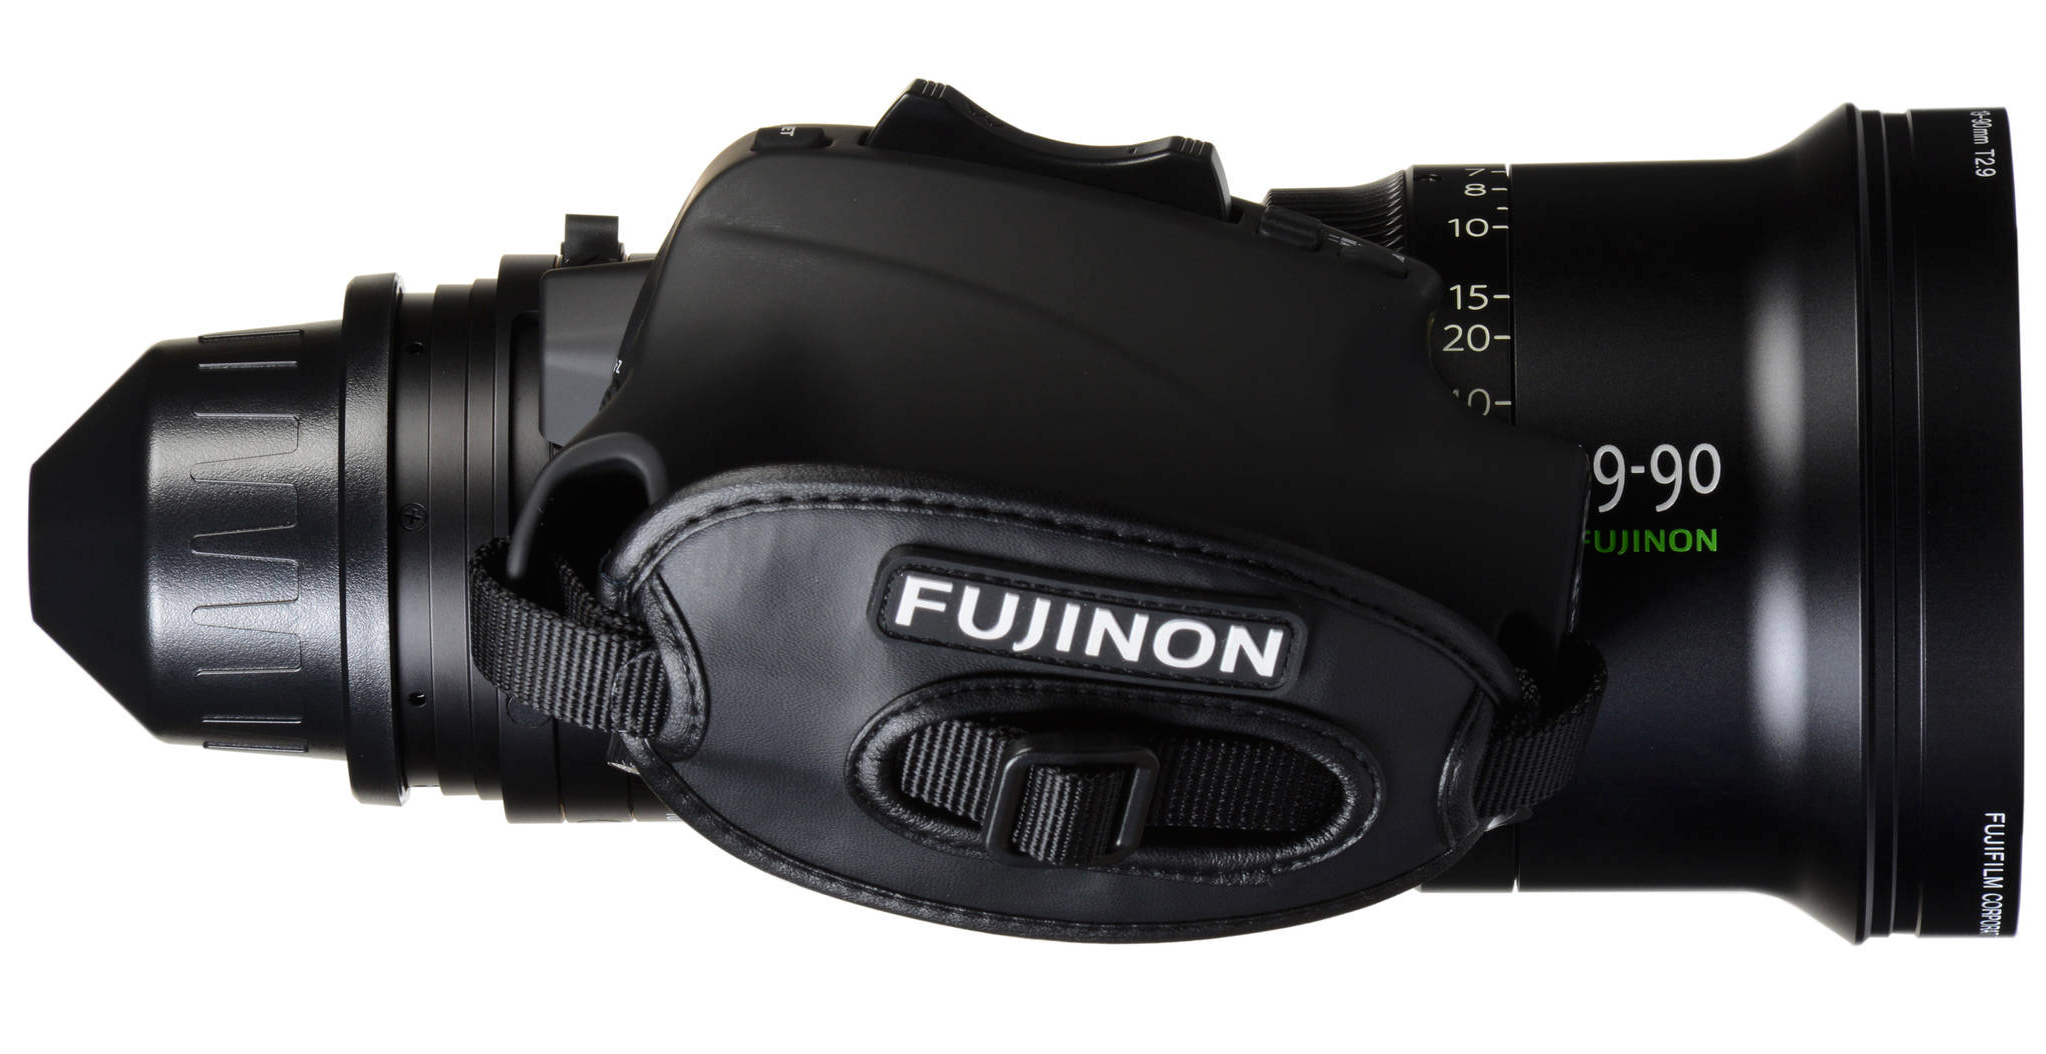 FUJINON 19-90mm